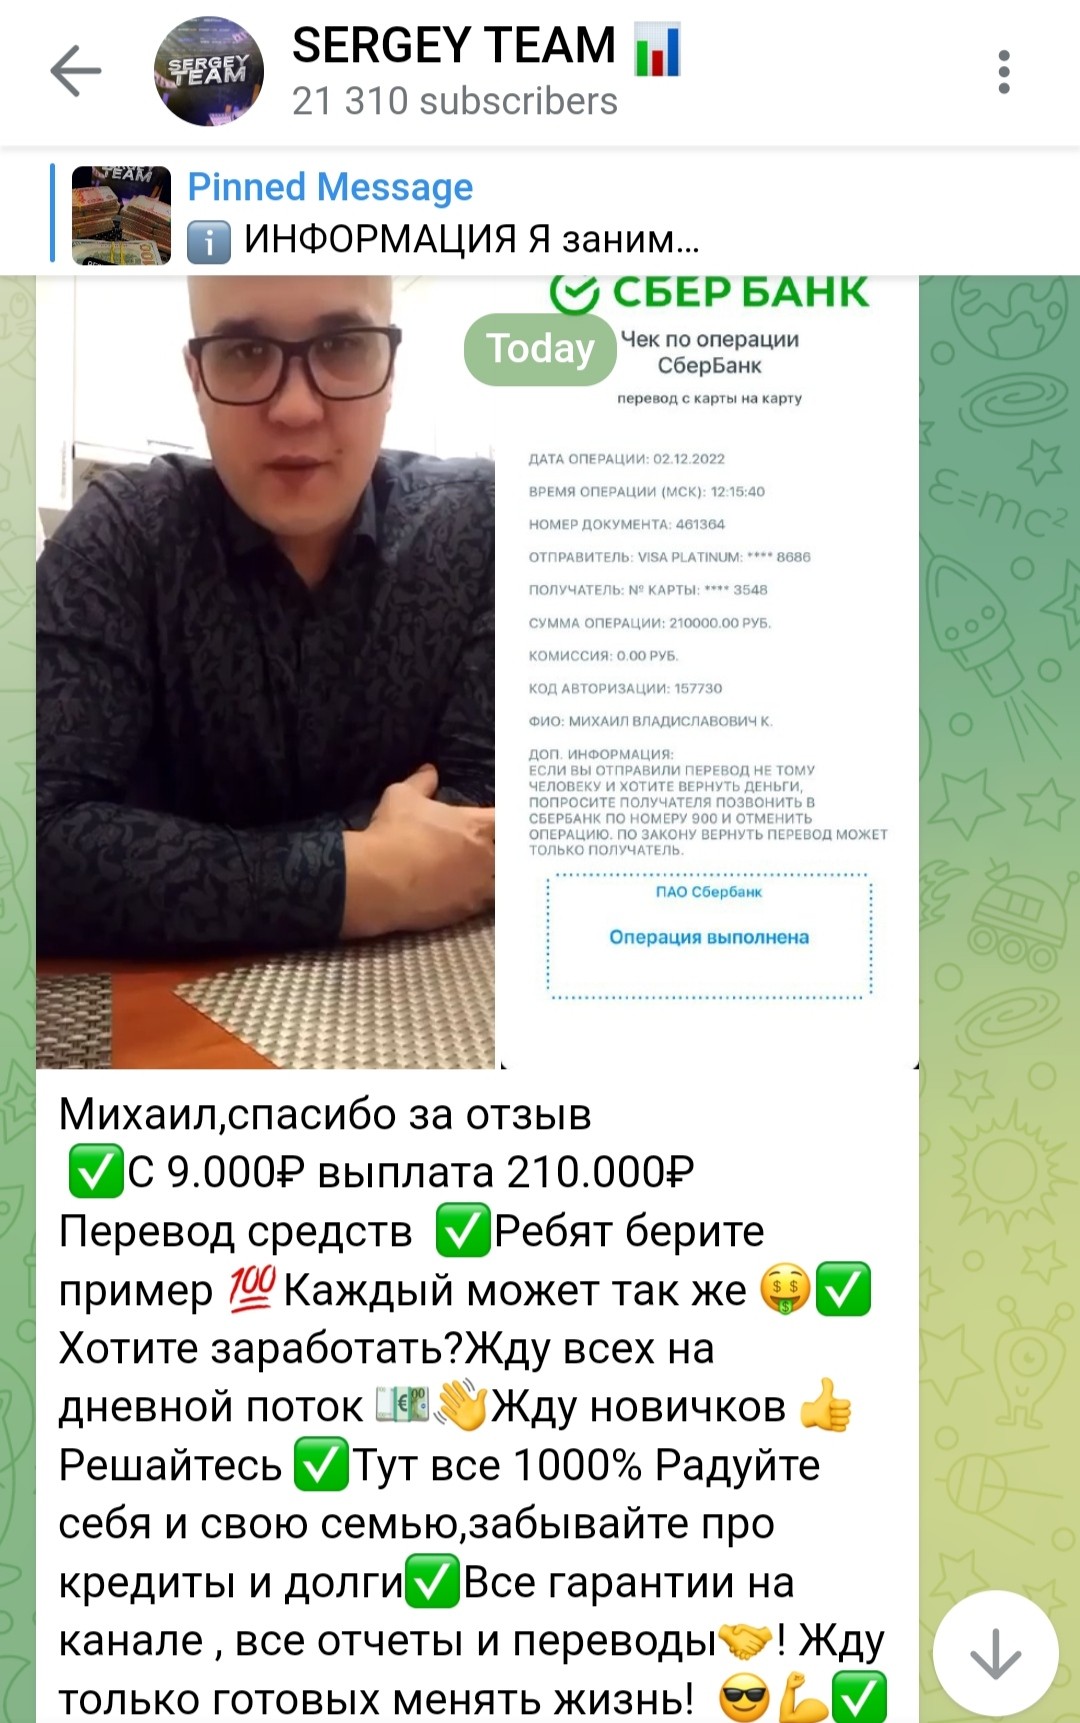 Sergey Team телеграм отзывы